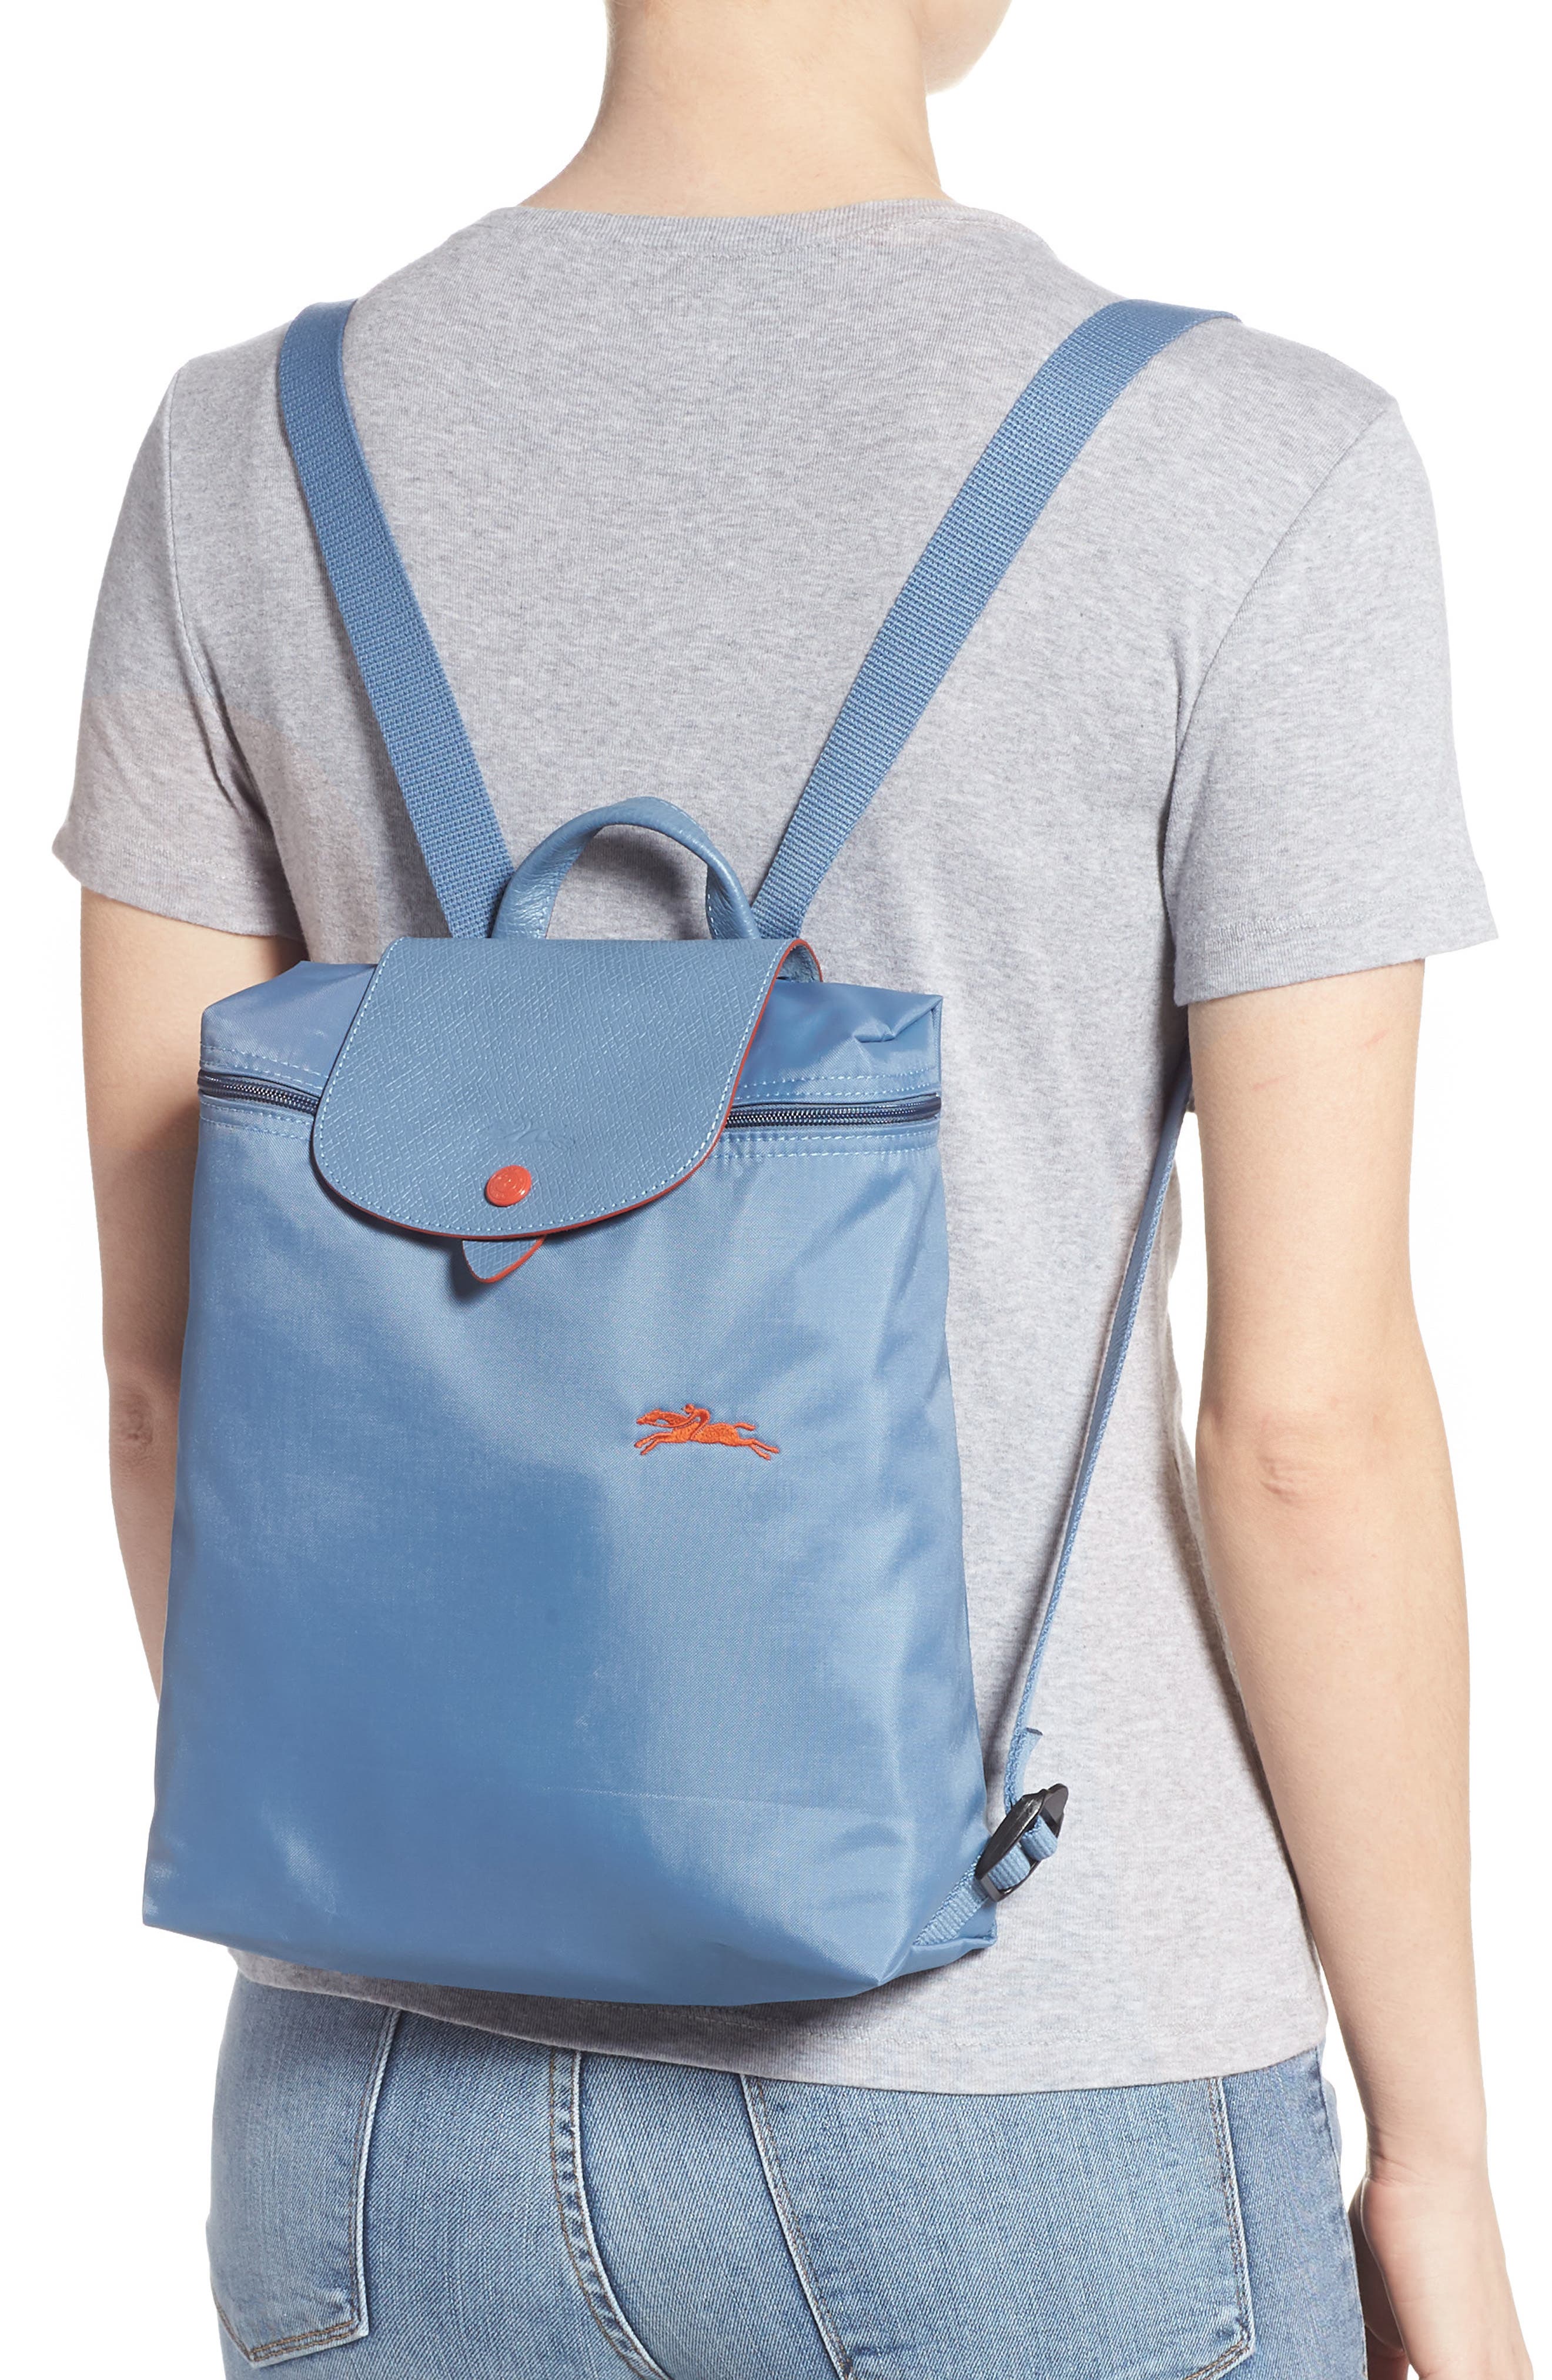 longchamp blue backpack